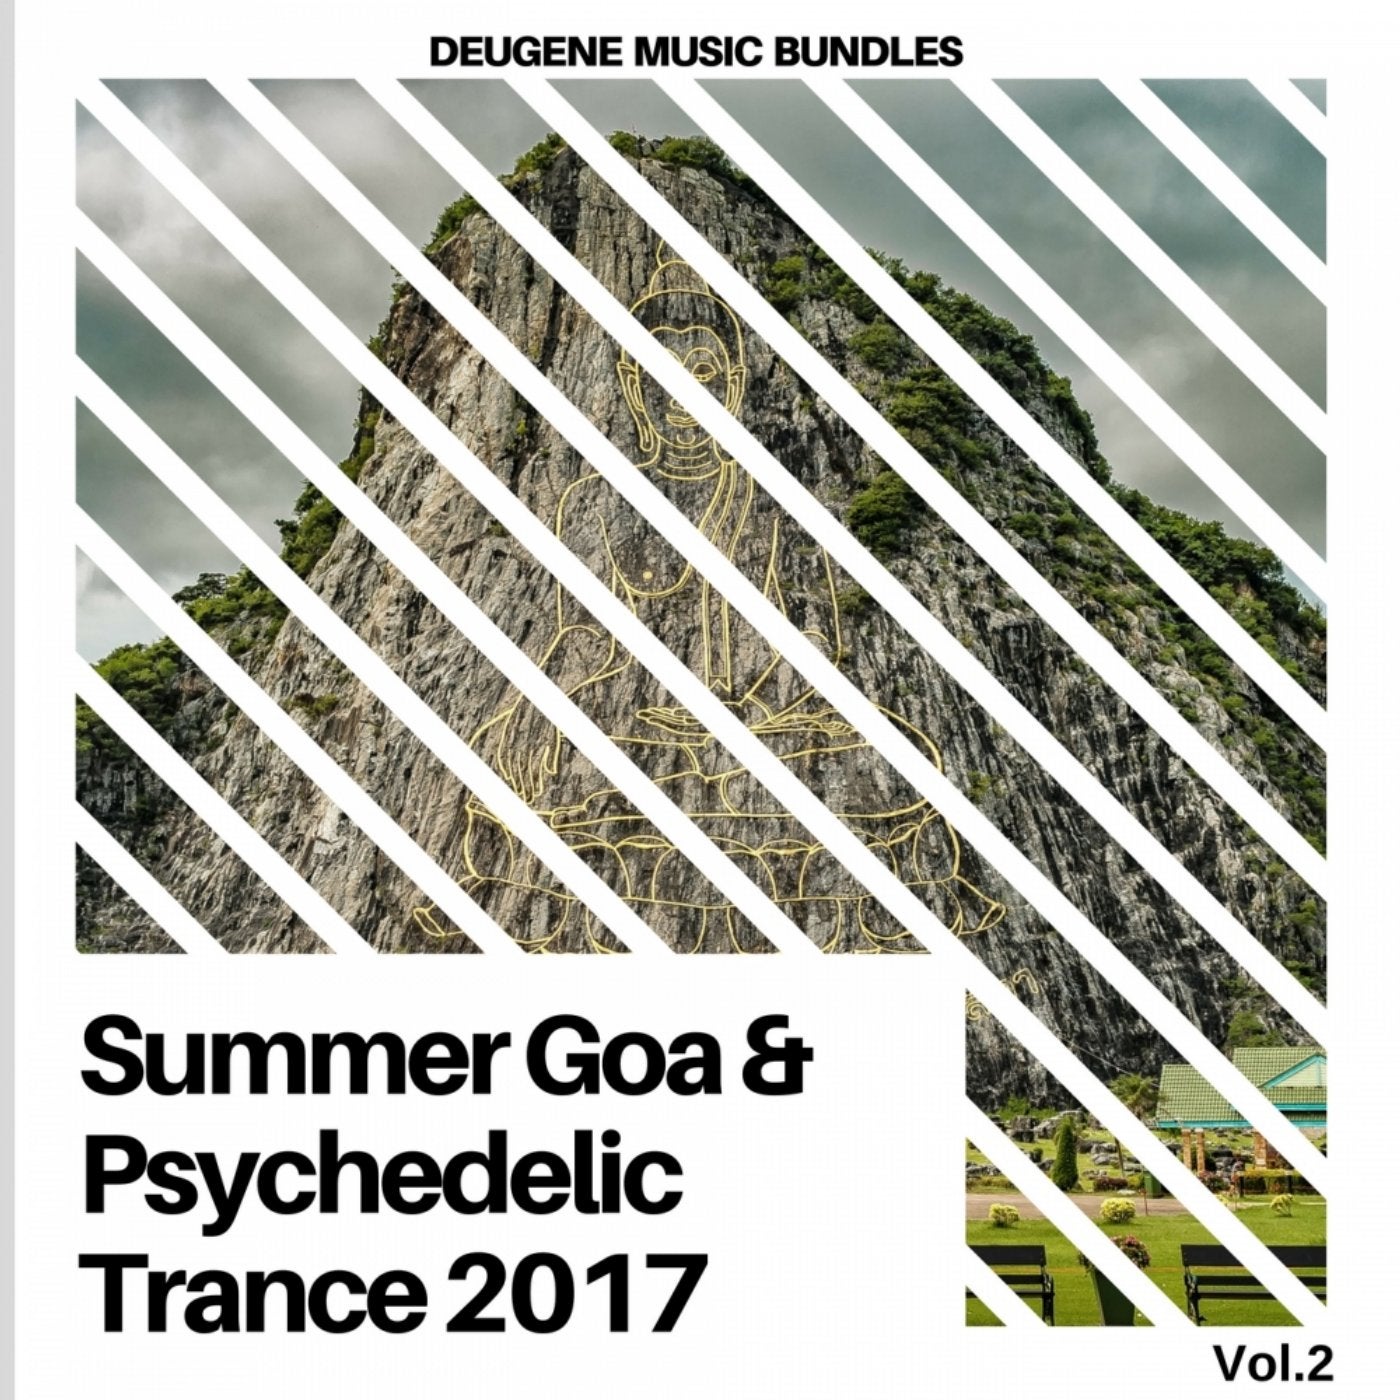 Purecloud5 - Summer Goa & Psychedelic Trance 2017, Vol. 2 [Deugene